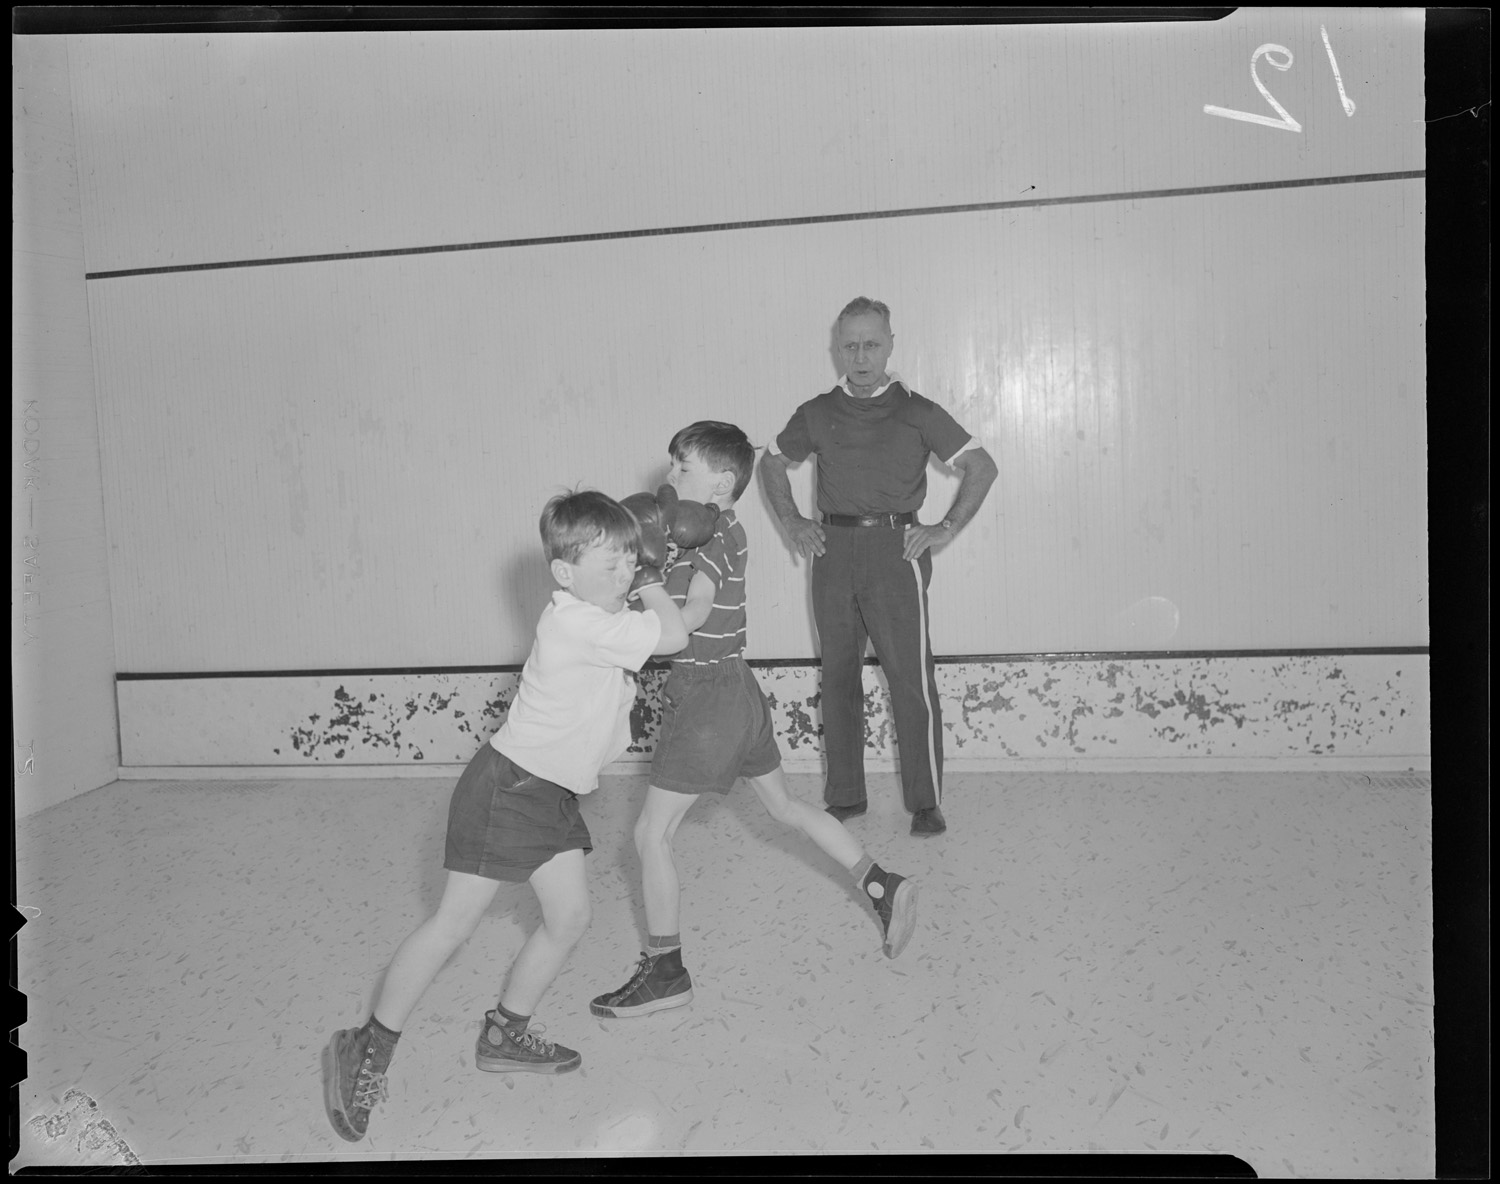 Boston boxing 1960s